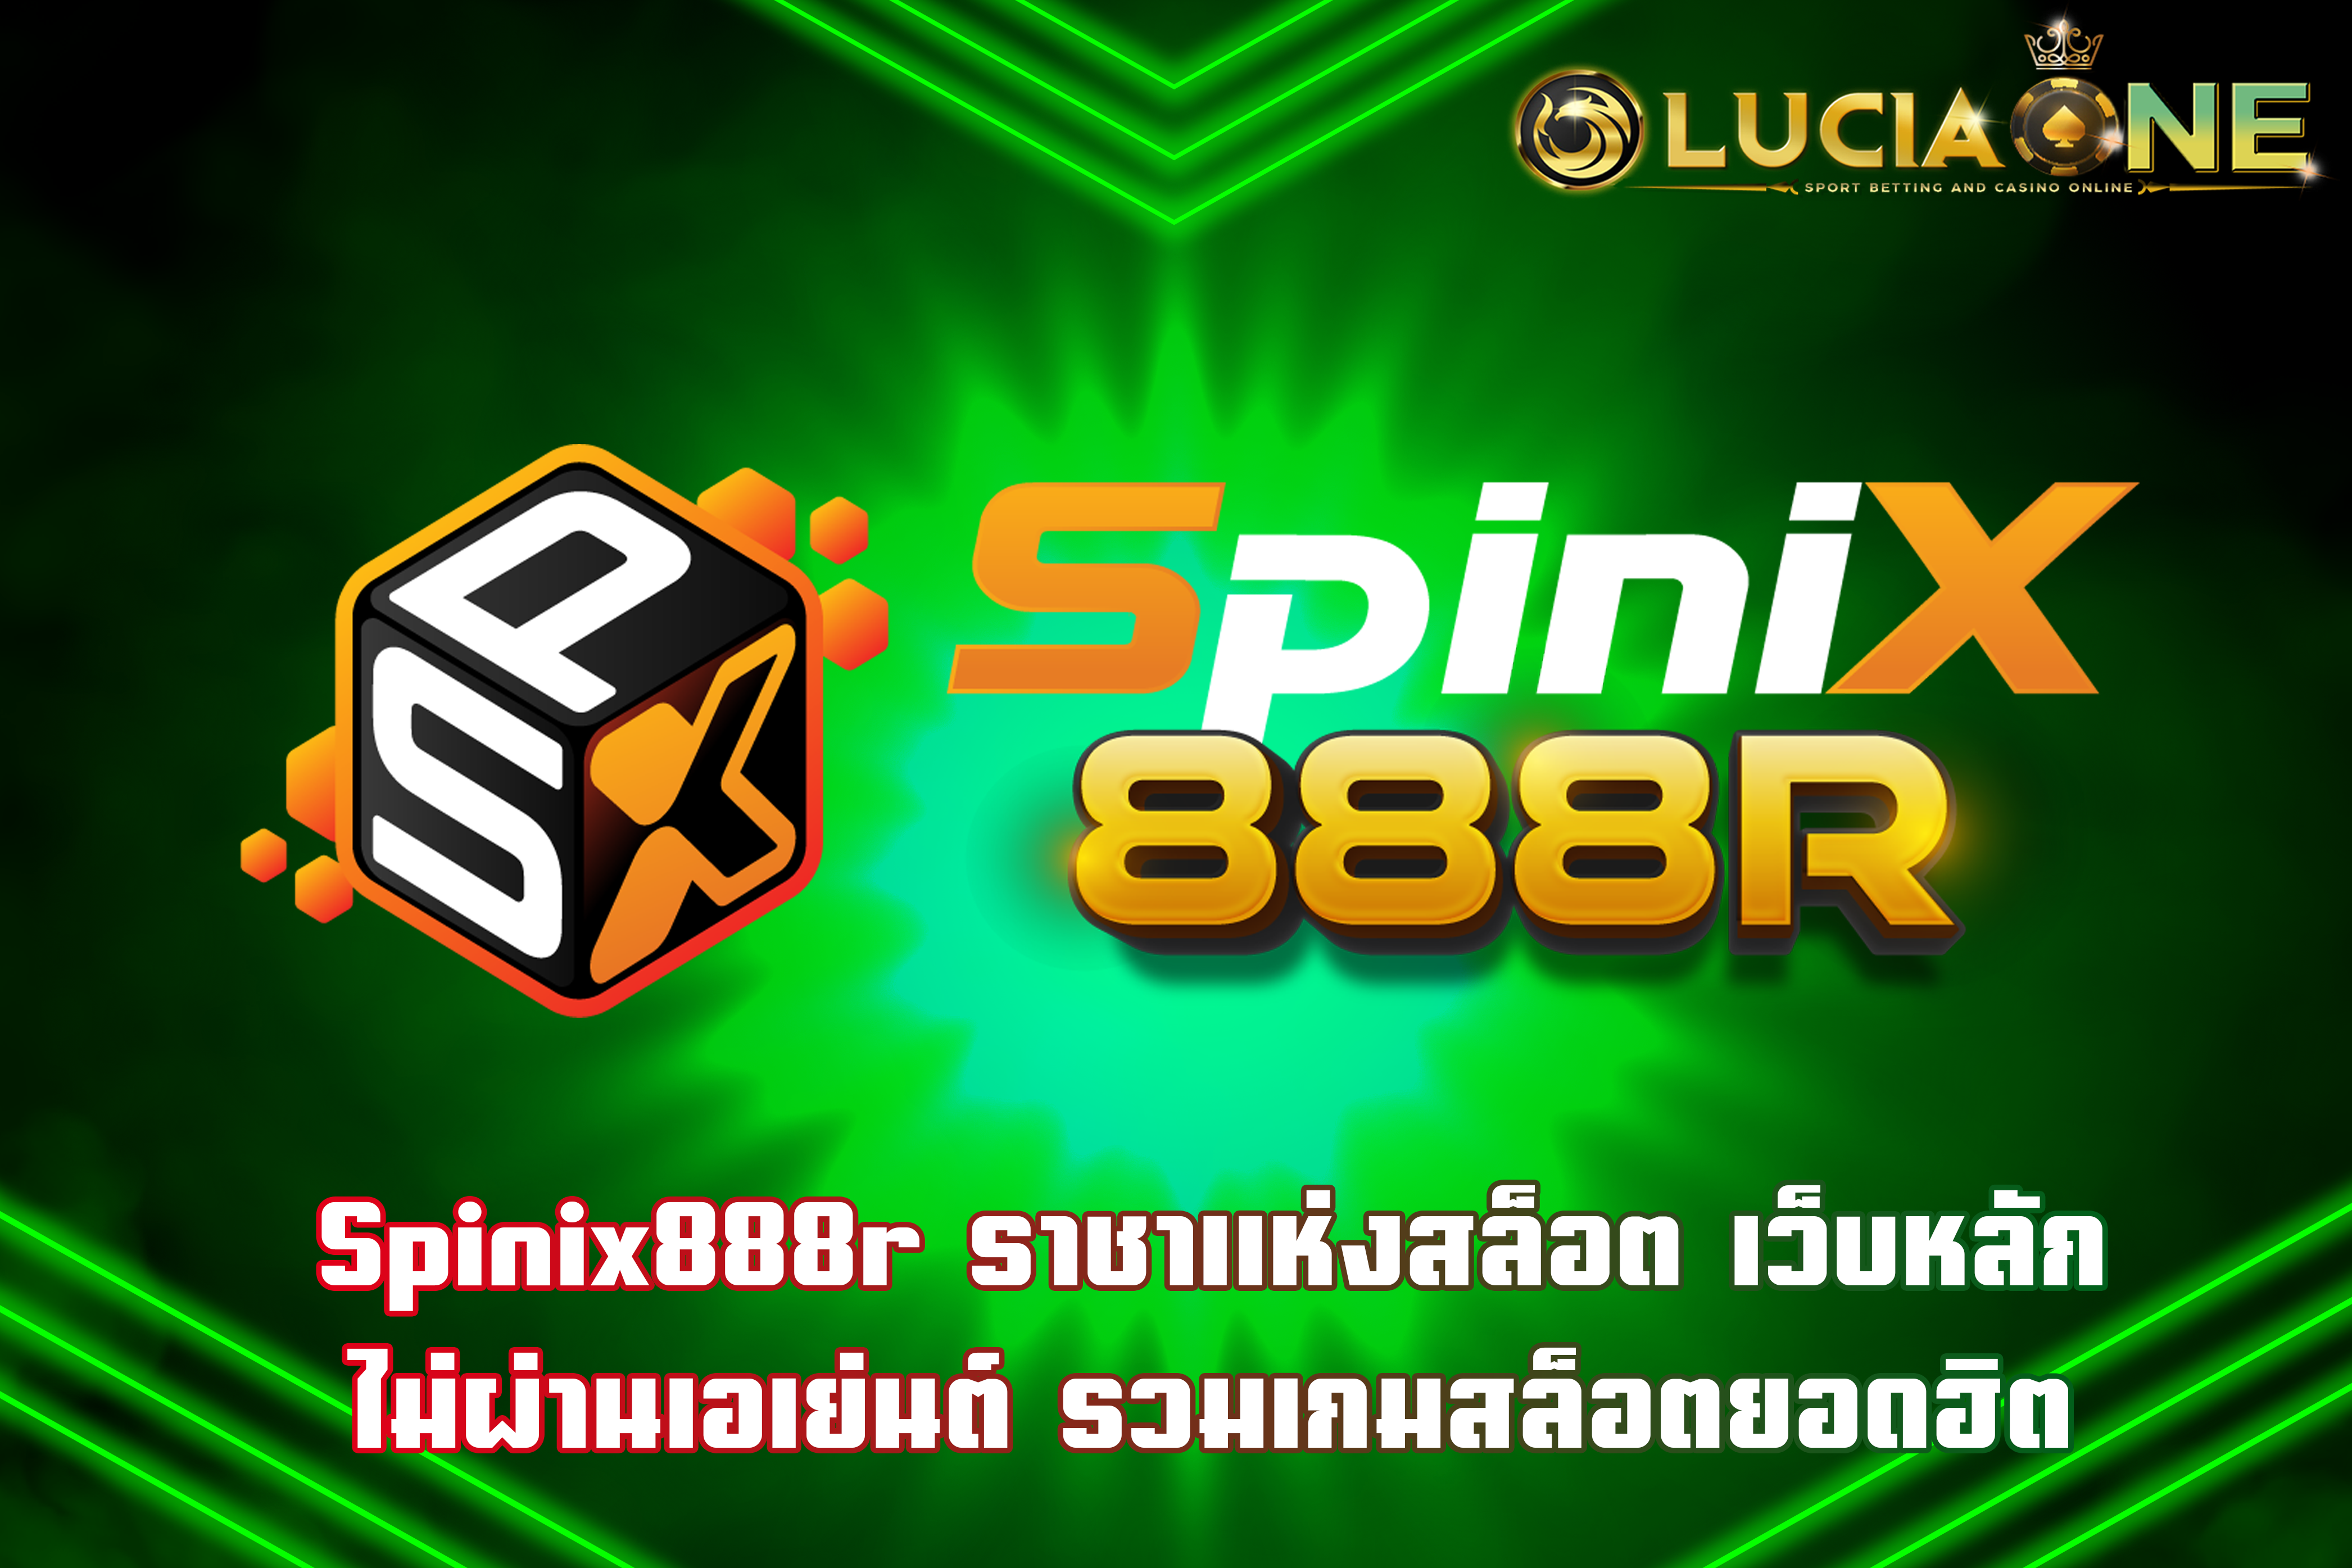 Spinix888r